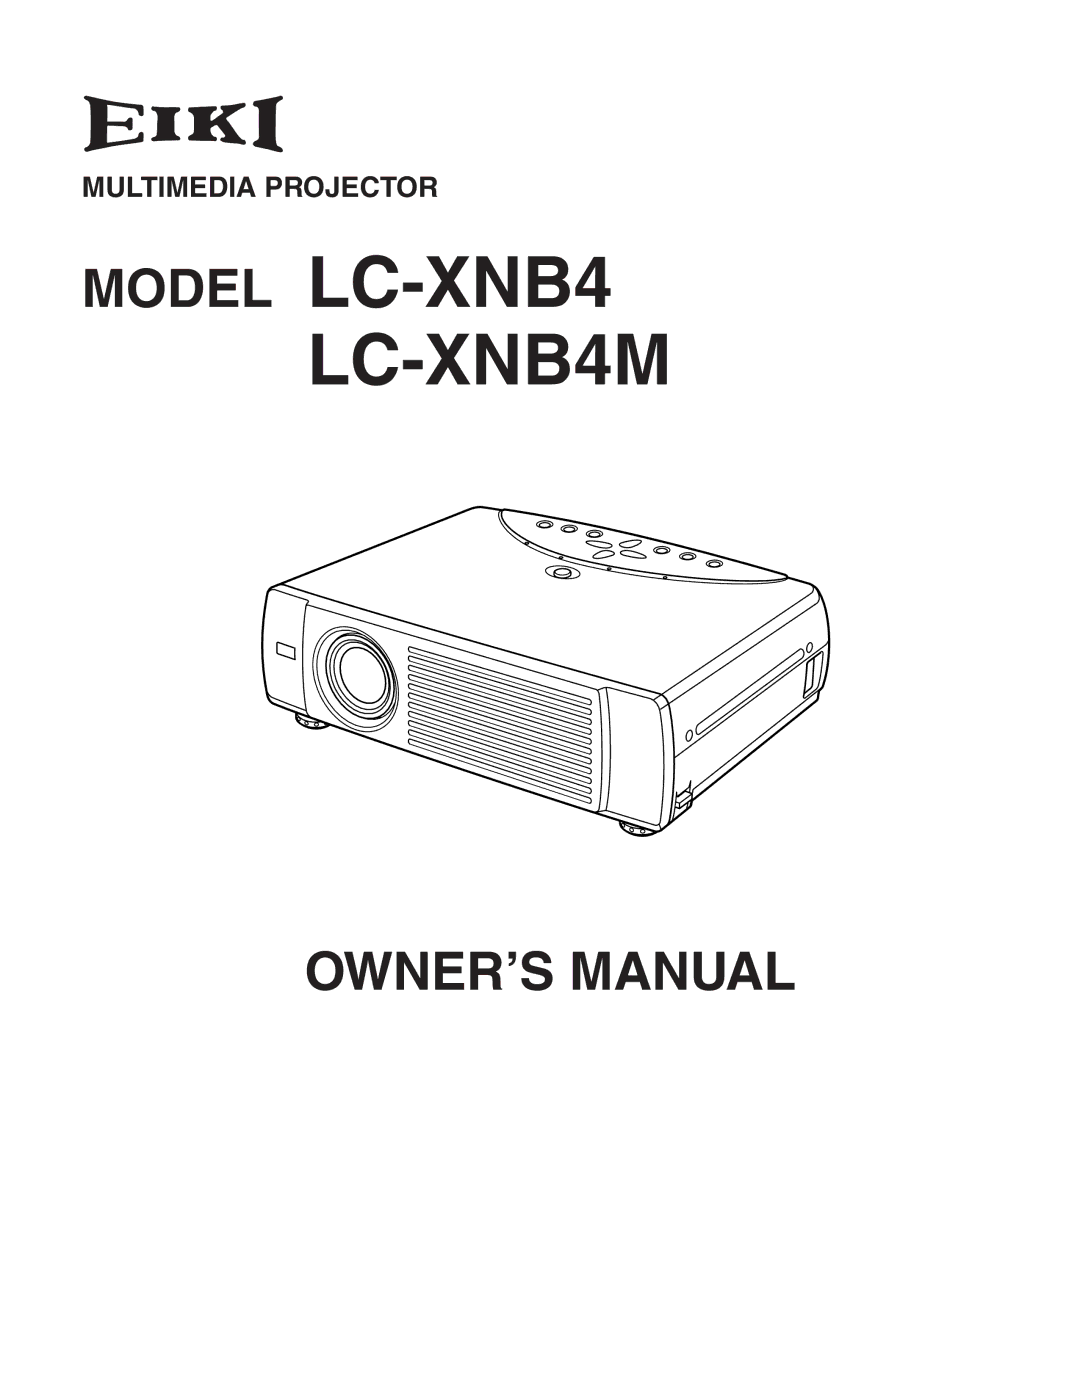 Eiki owner manual Model LC-XNB4 LC-XNB4M 